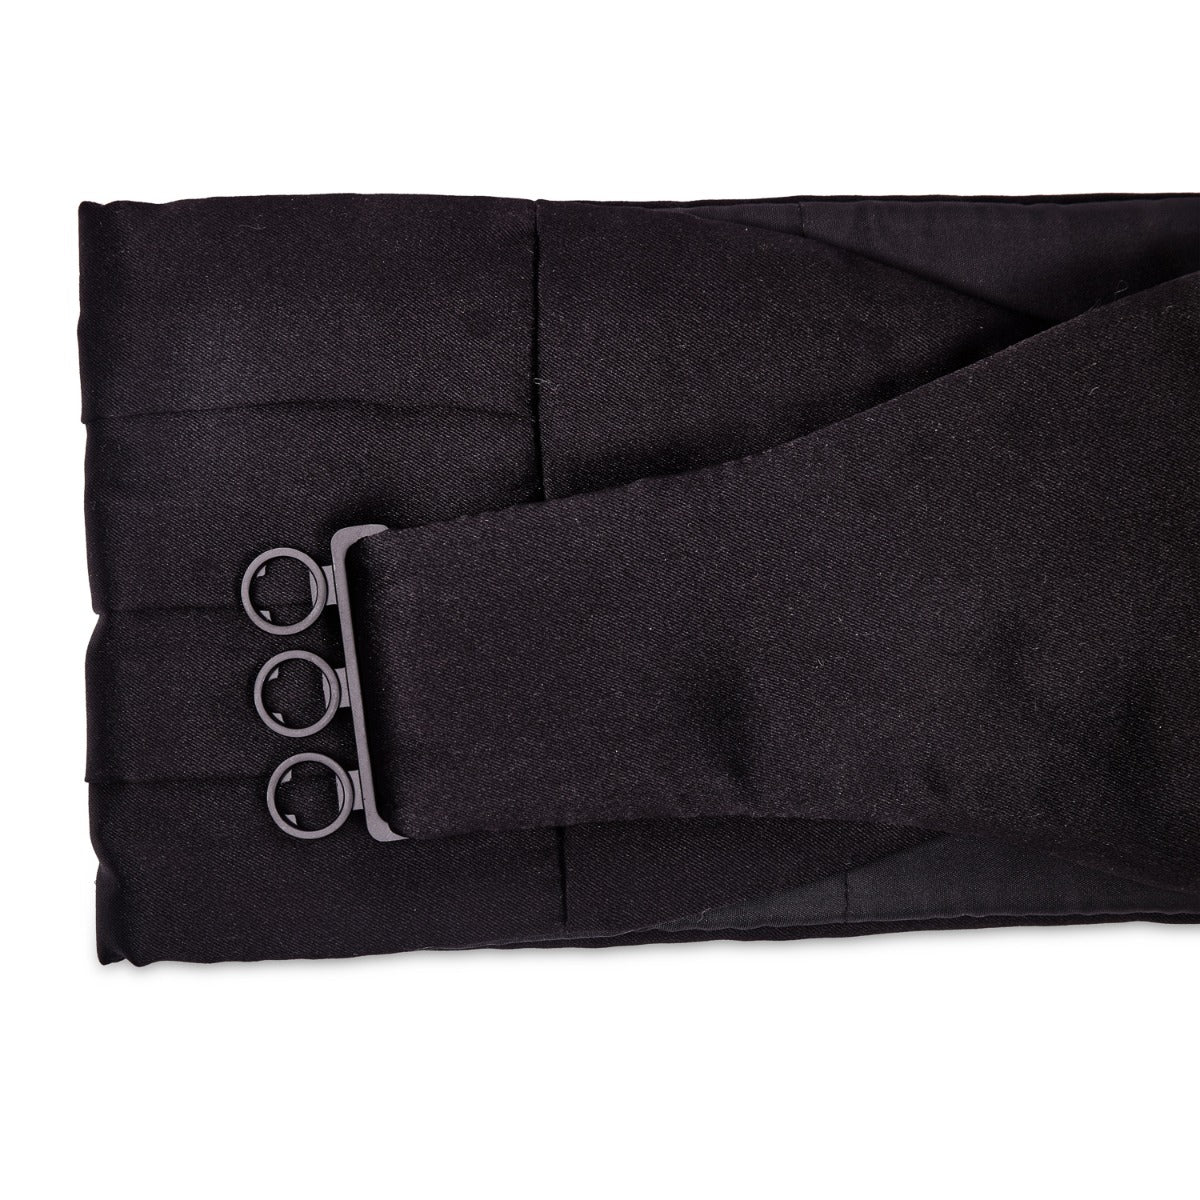 A Sovereign Grade Black Satin Cummerbund with metal buckles, a formalwear accessory by KirbyAllison.com.